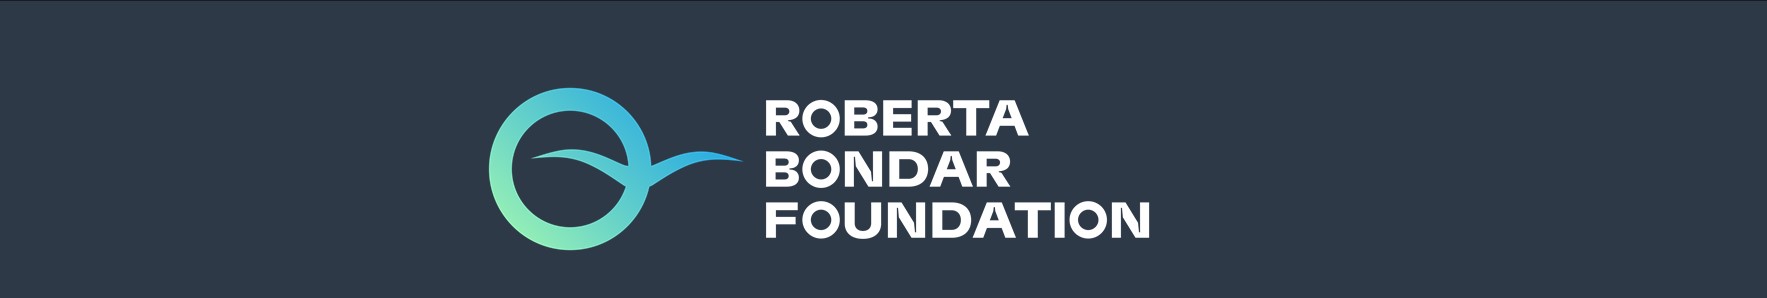 Banner for the Roberta Bondar Foundation